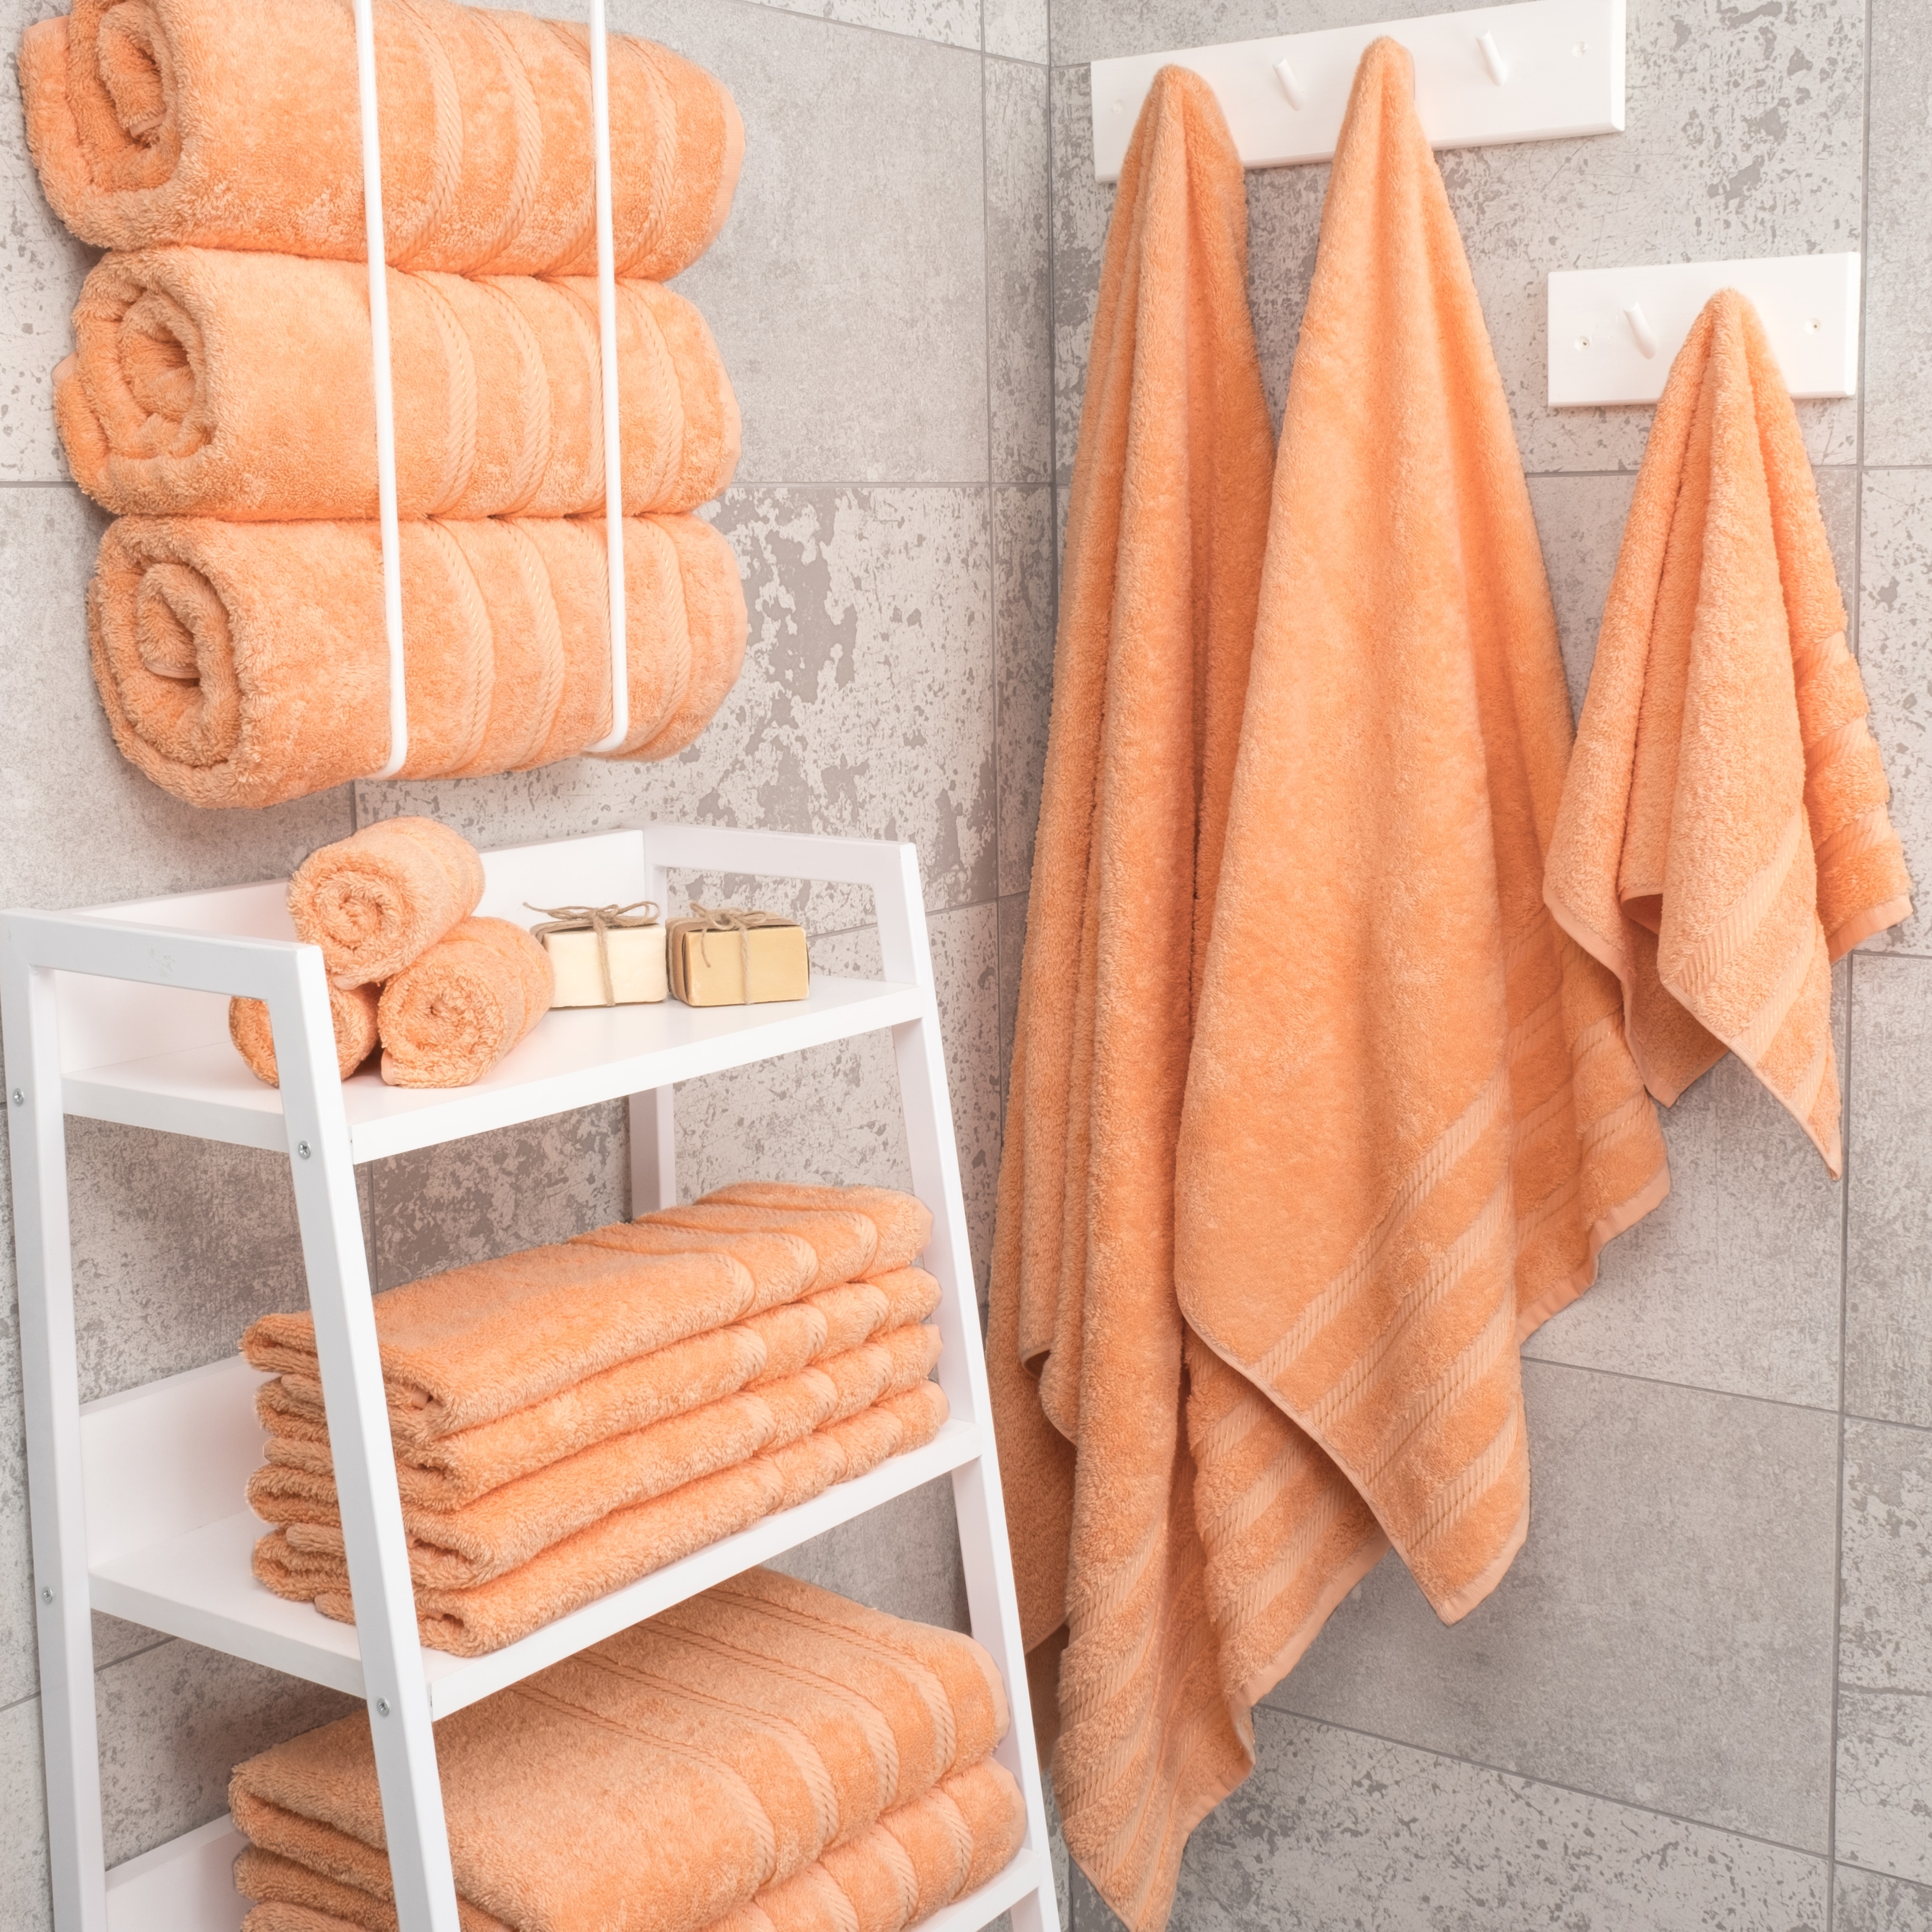 https://ak1.ostkcdn.com/images/products/is/images/direct/19111279b48fa5e4059fe9b4671ff882e2f7c9a9/American-Soft-Linen-Turkish-Cotton-4-Piece-Bath-Towel-Set.jpg